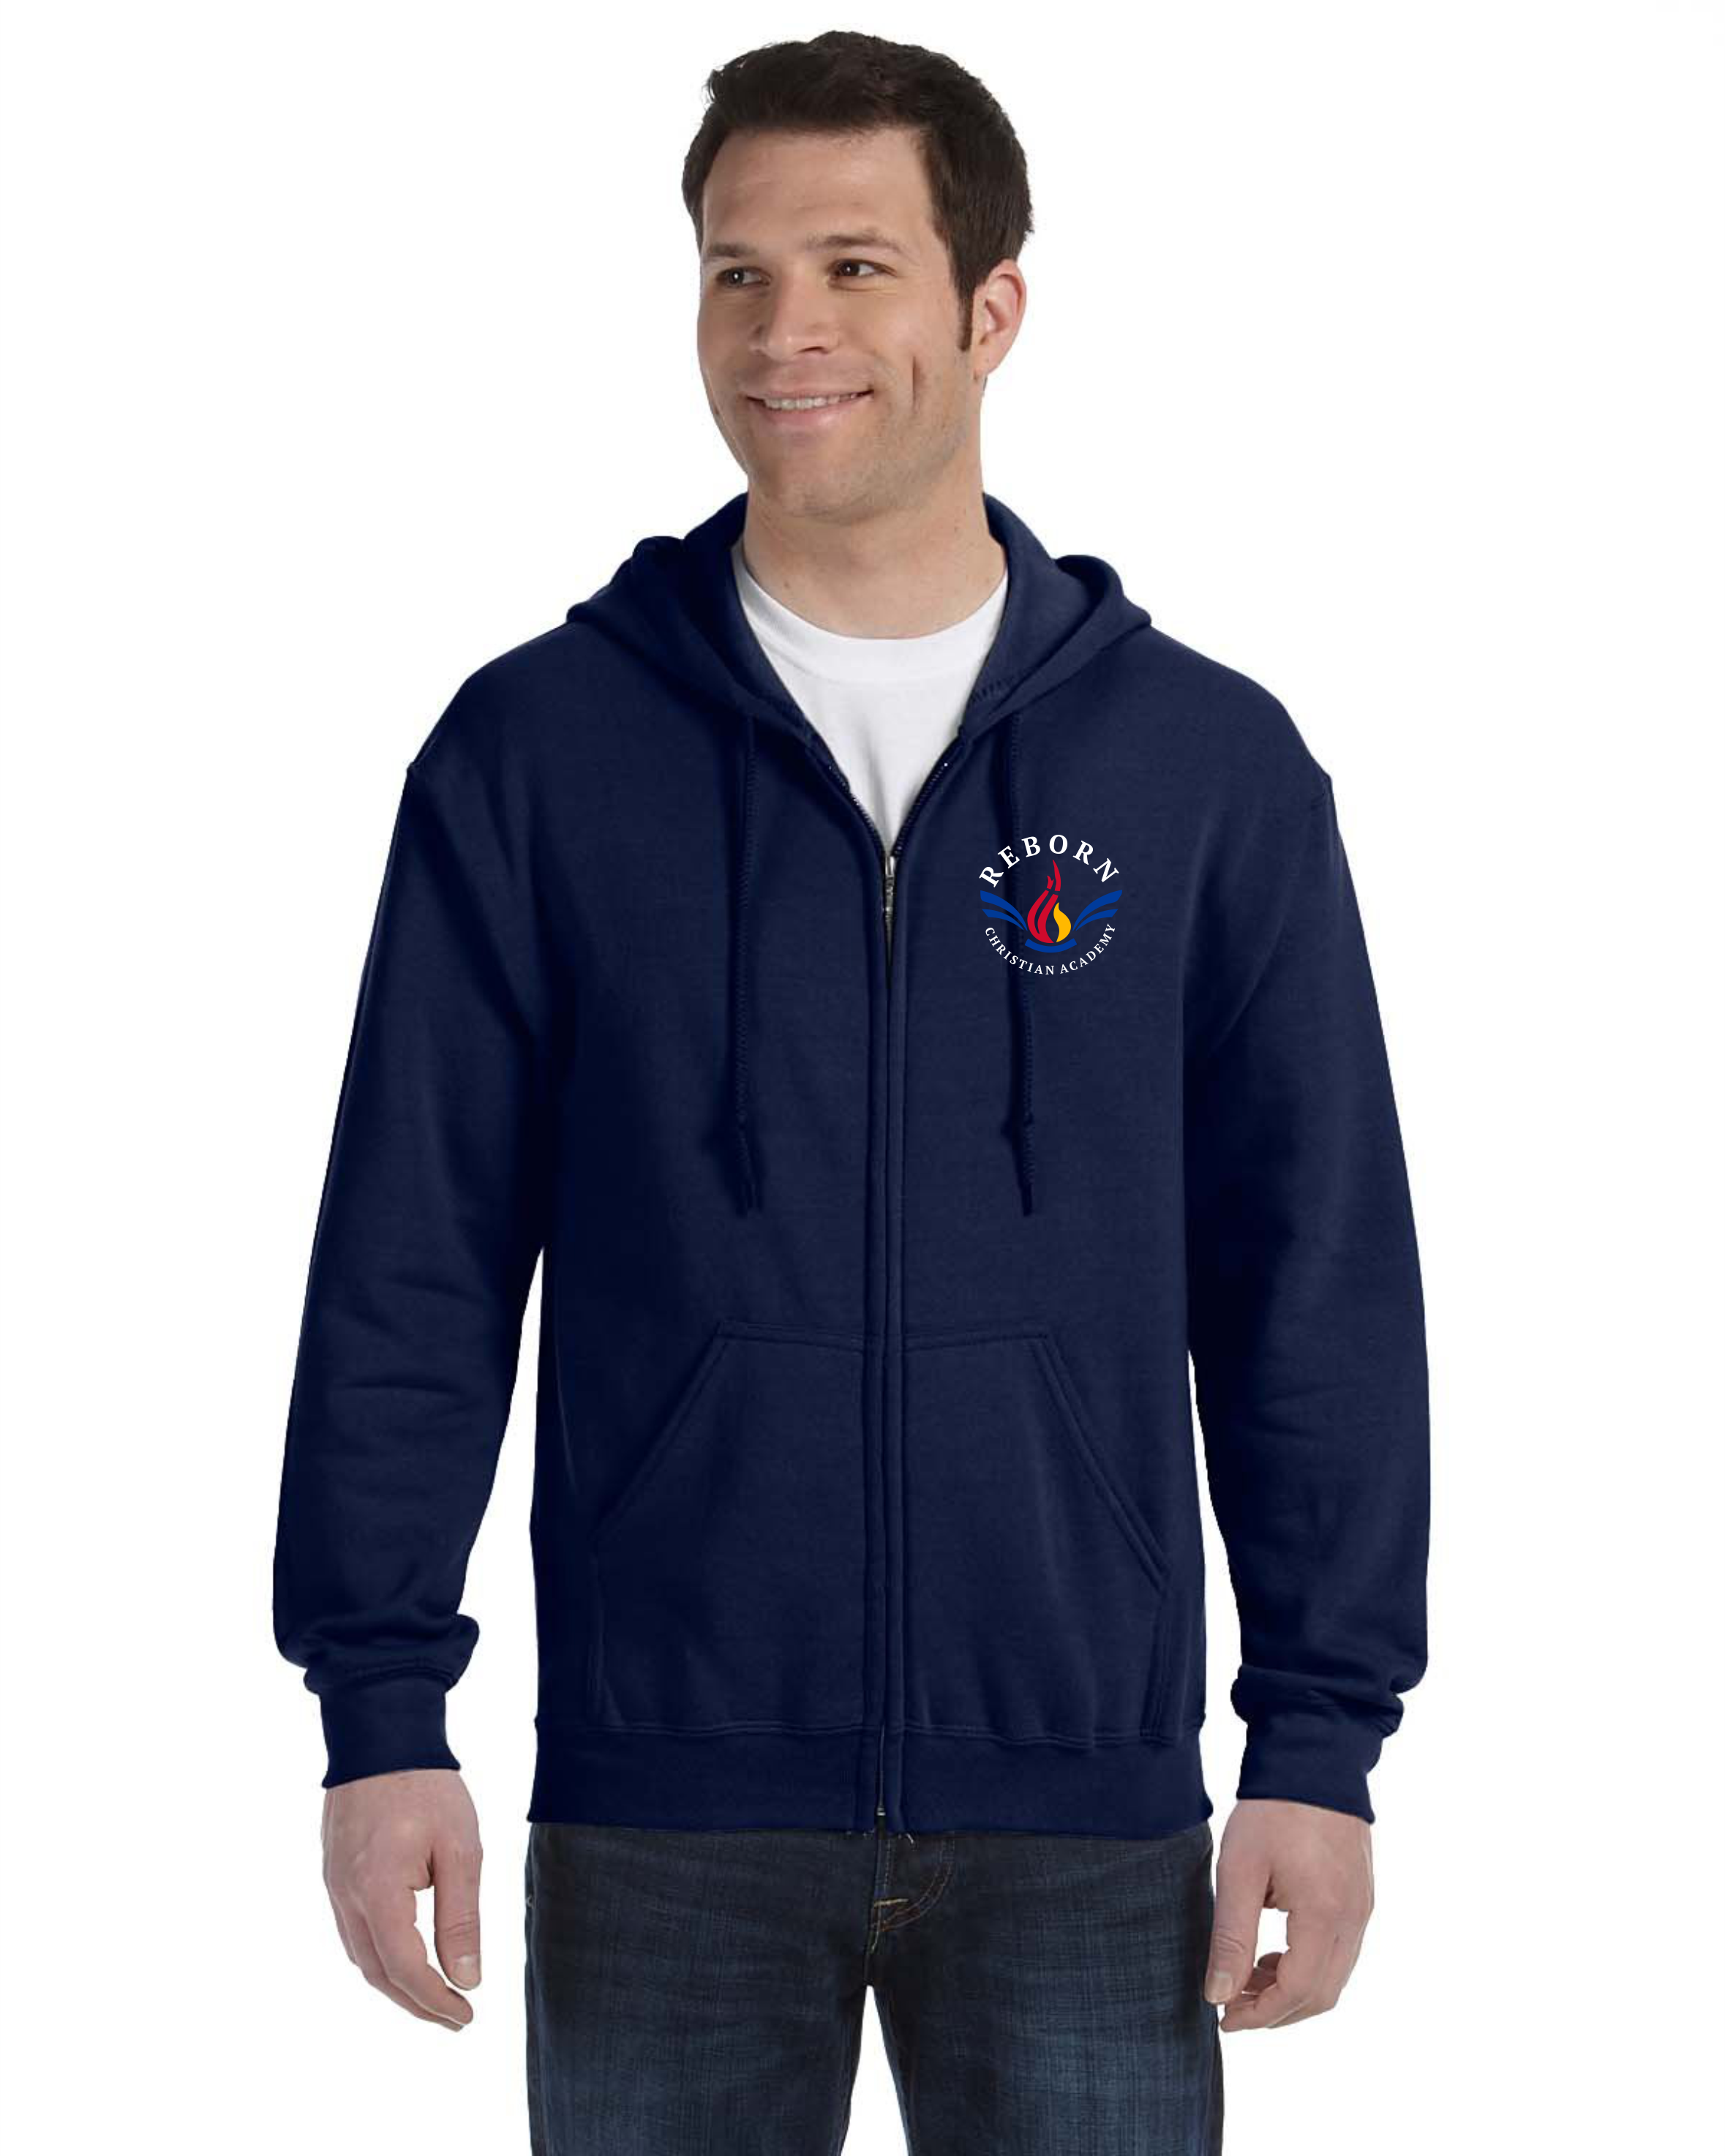 Reborn Christian academy Full-Zip Hooded Sweatshirt